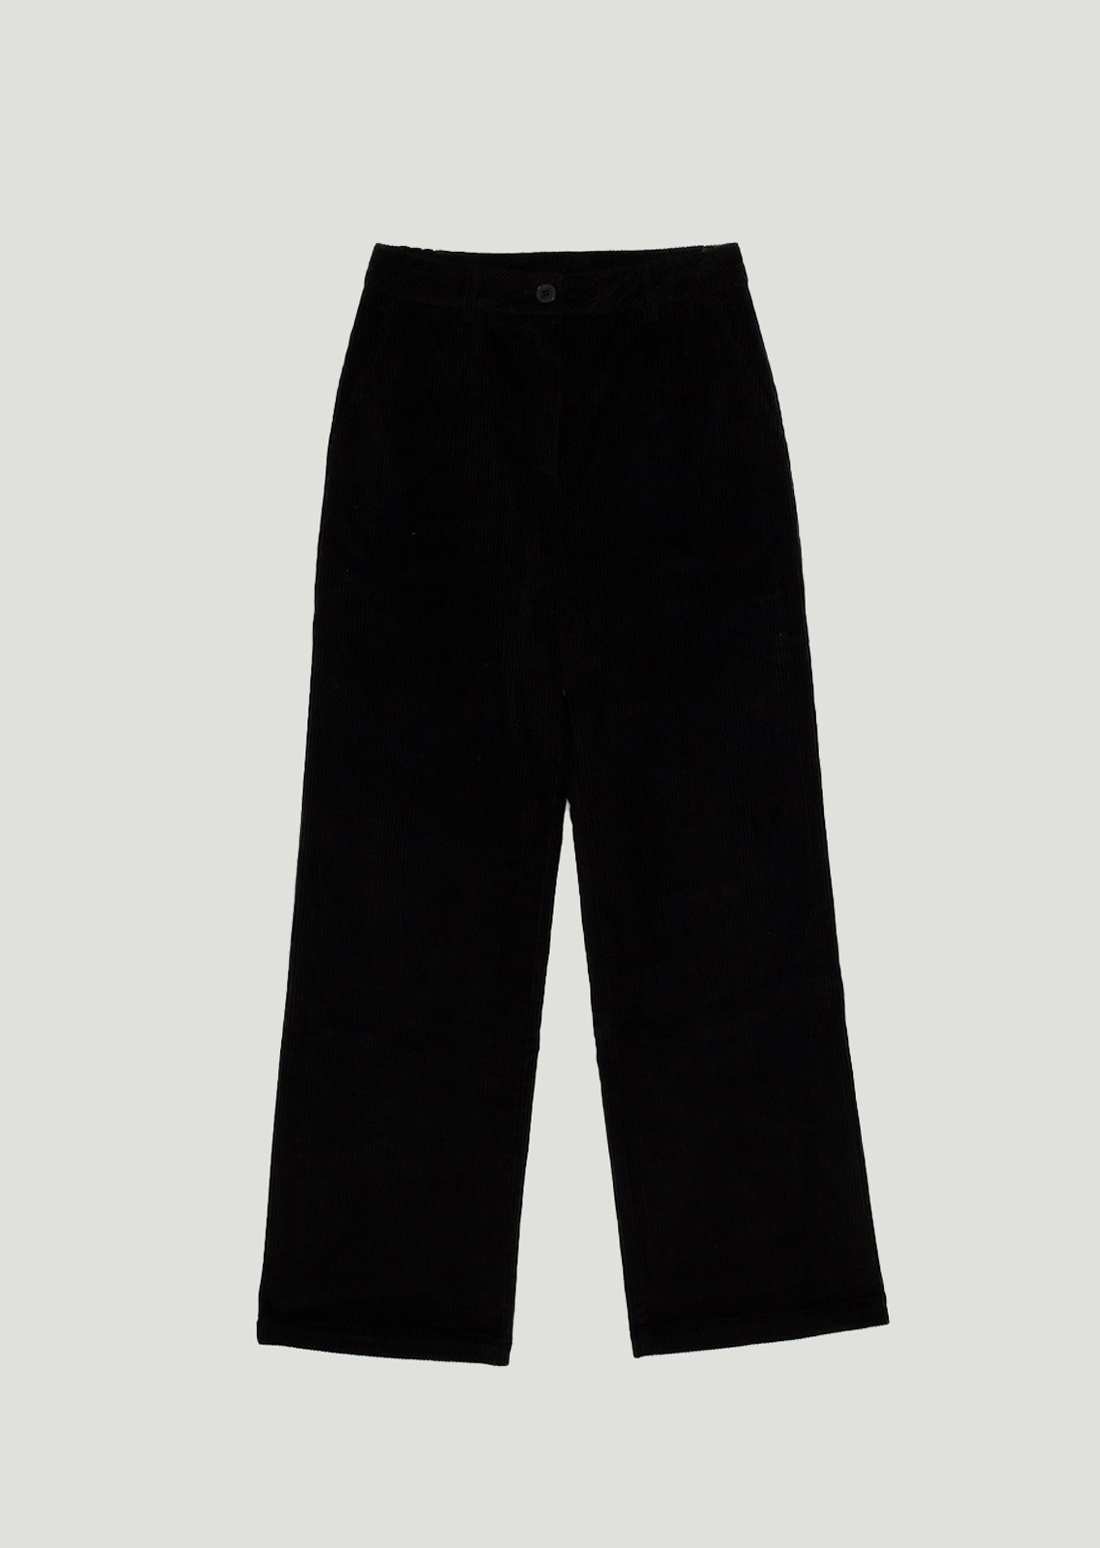 Retro Corduroy Pants (Black)